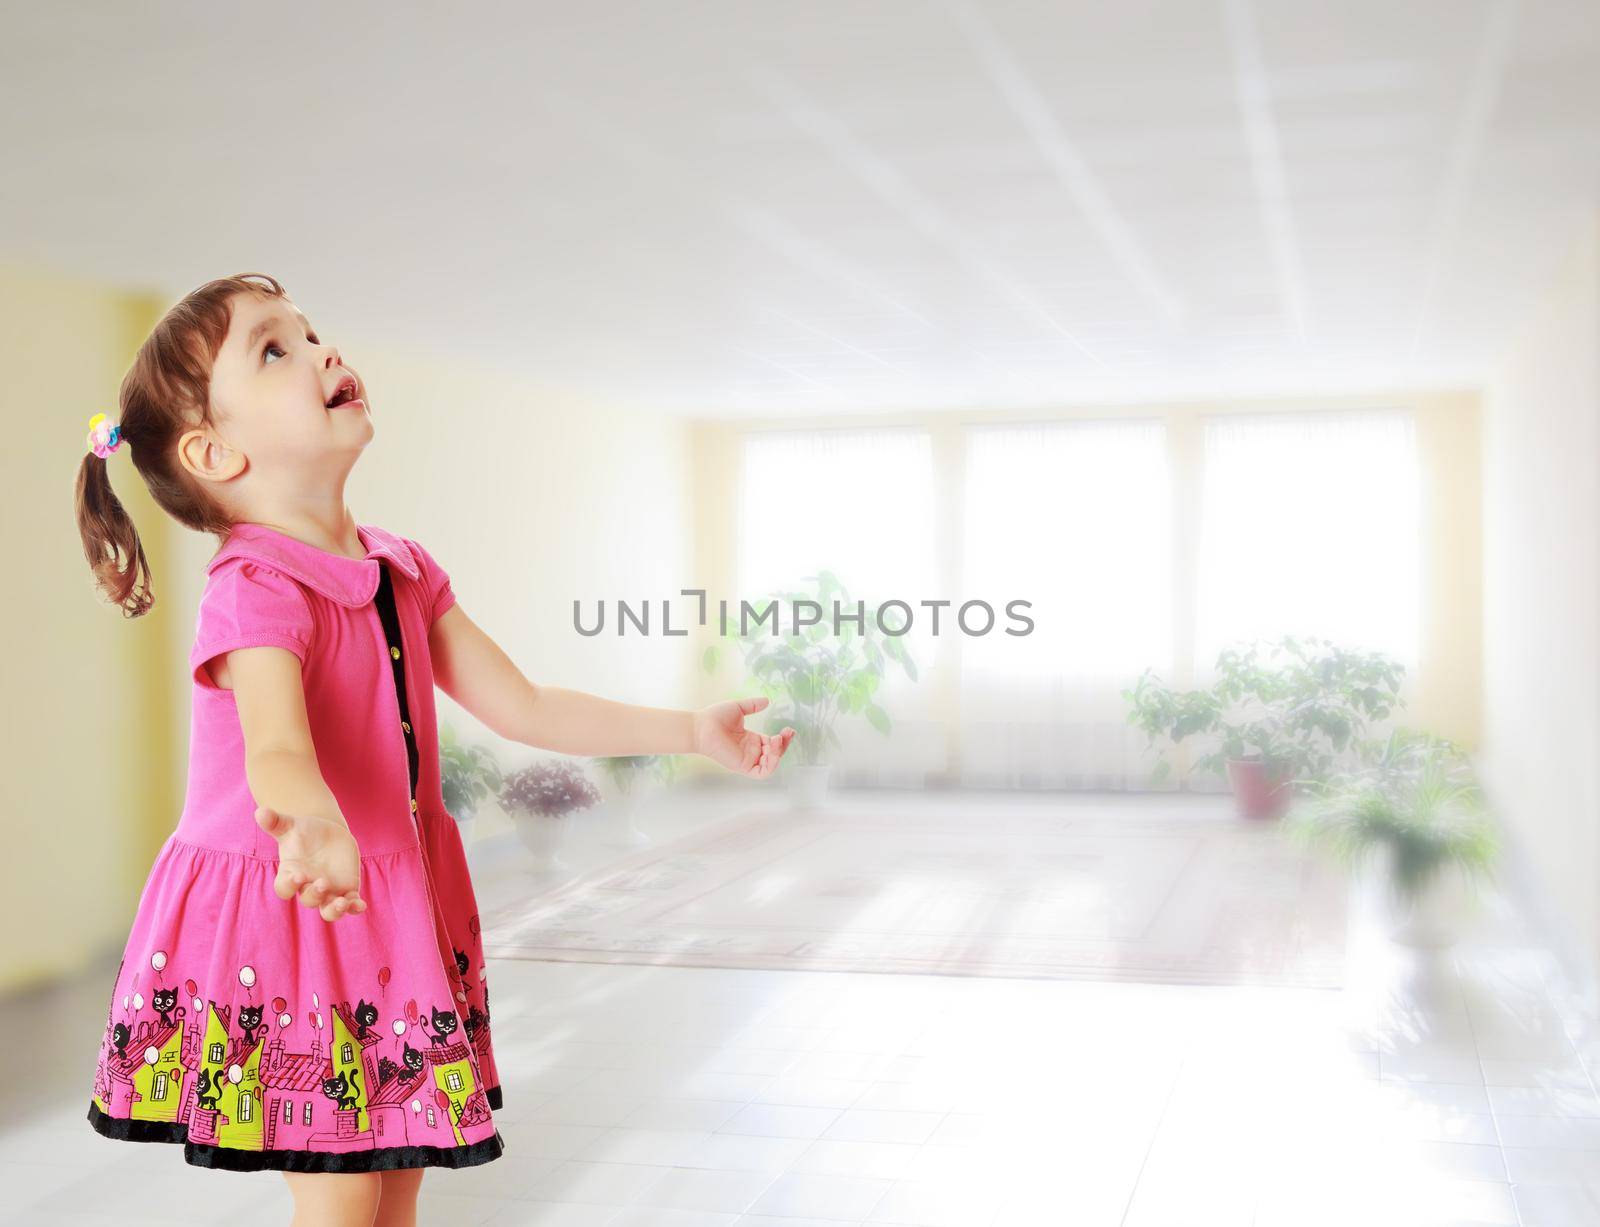 The little girl was surprised by kolesnikov_studio